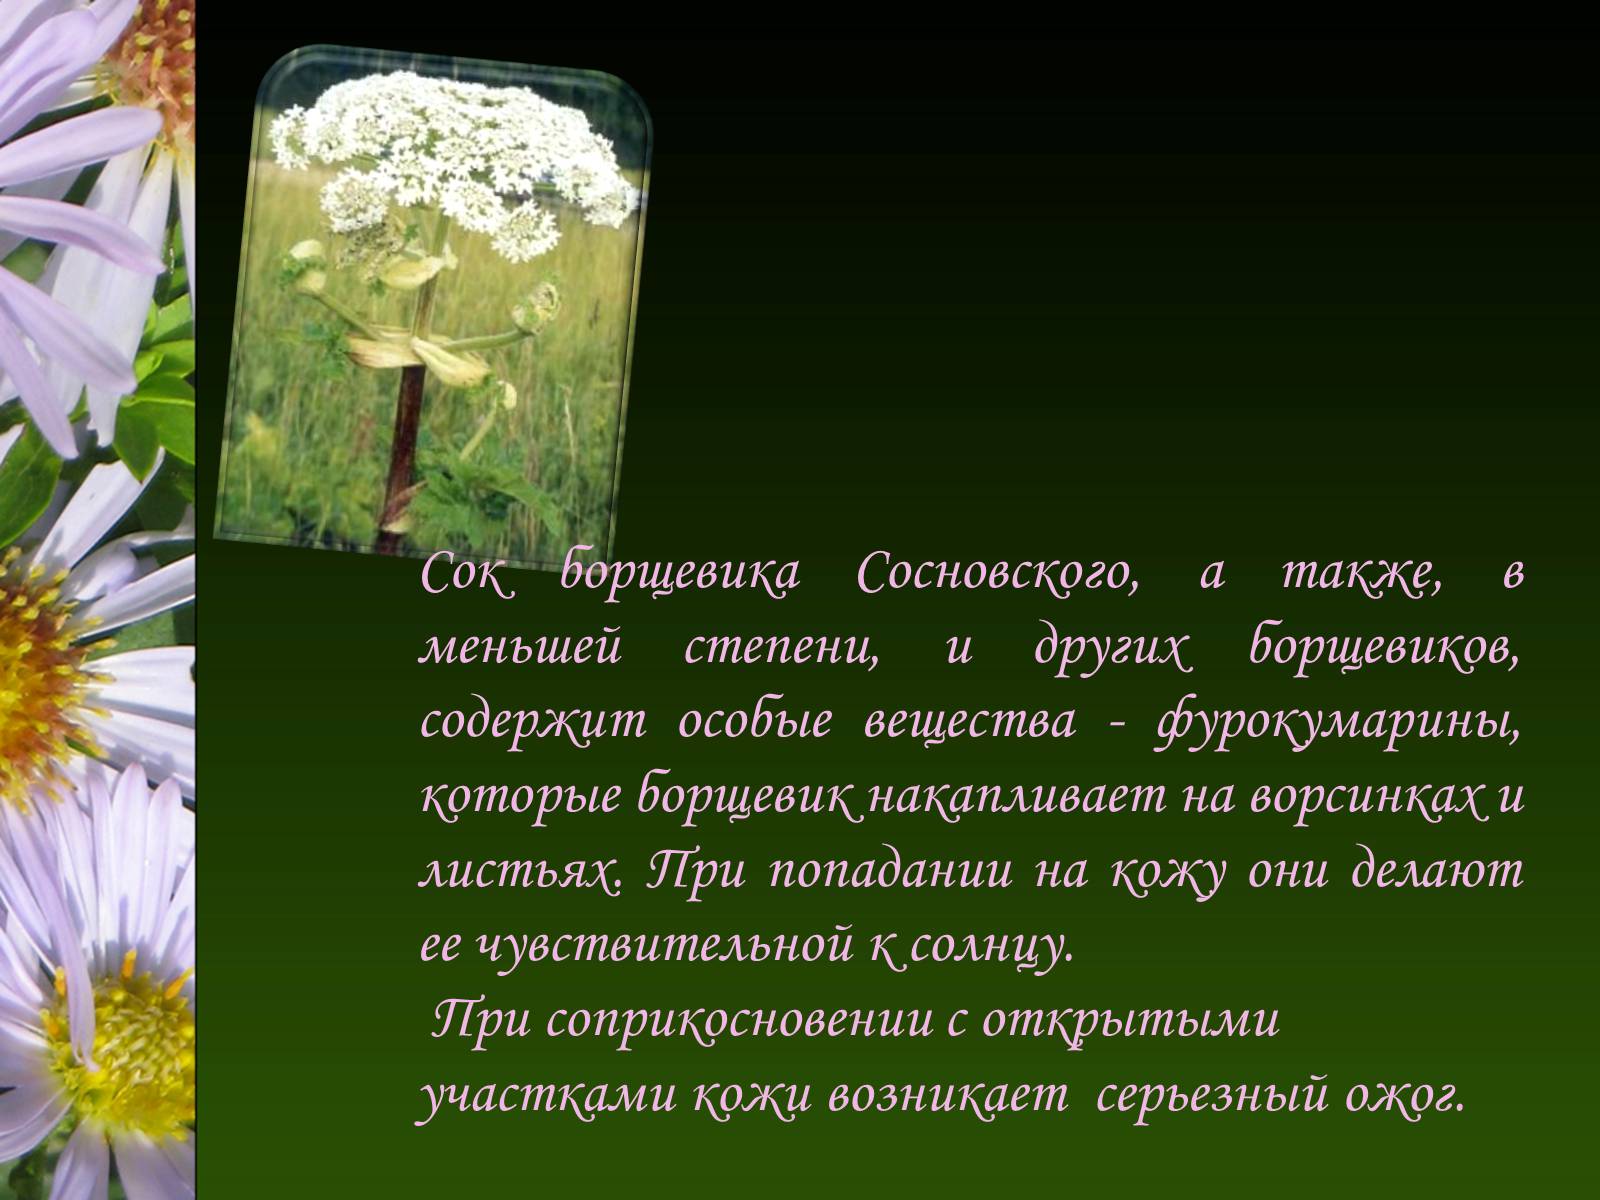 Презентація на тему «Ядовитые растения Украины» - Слайд #5